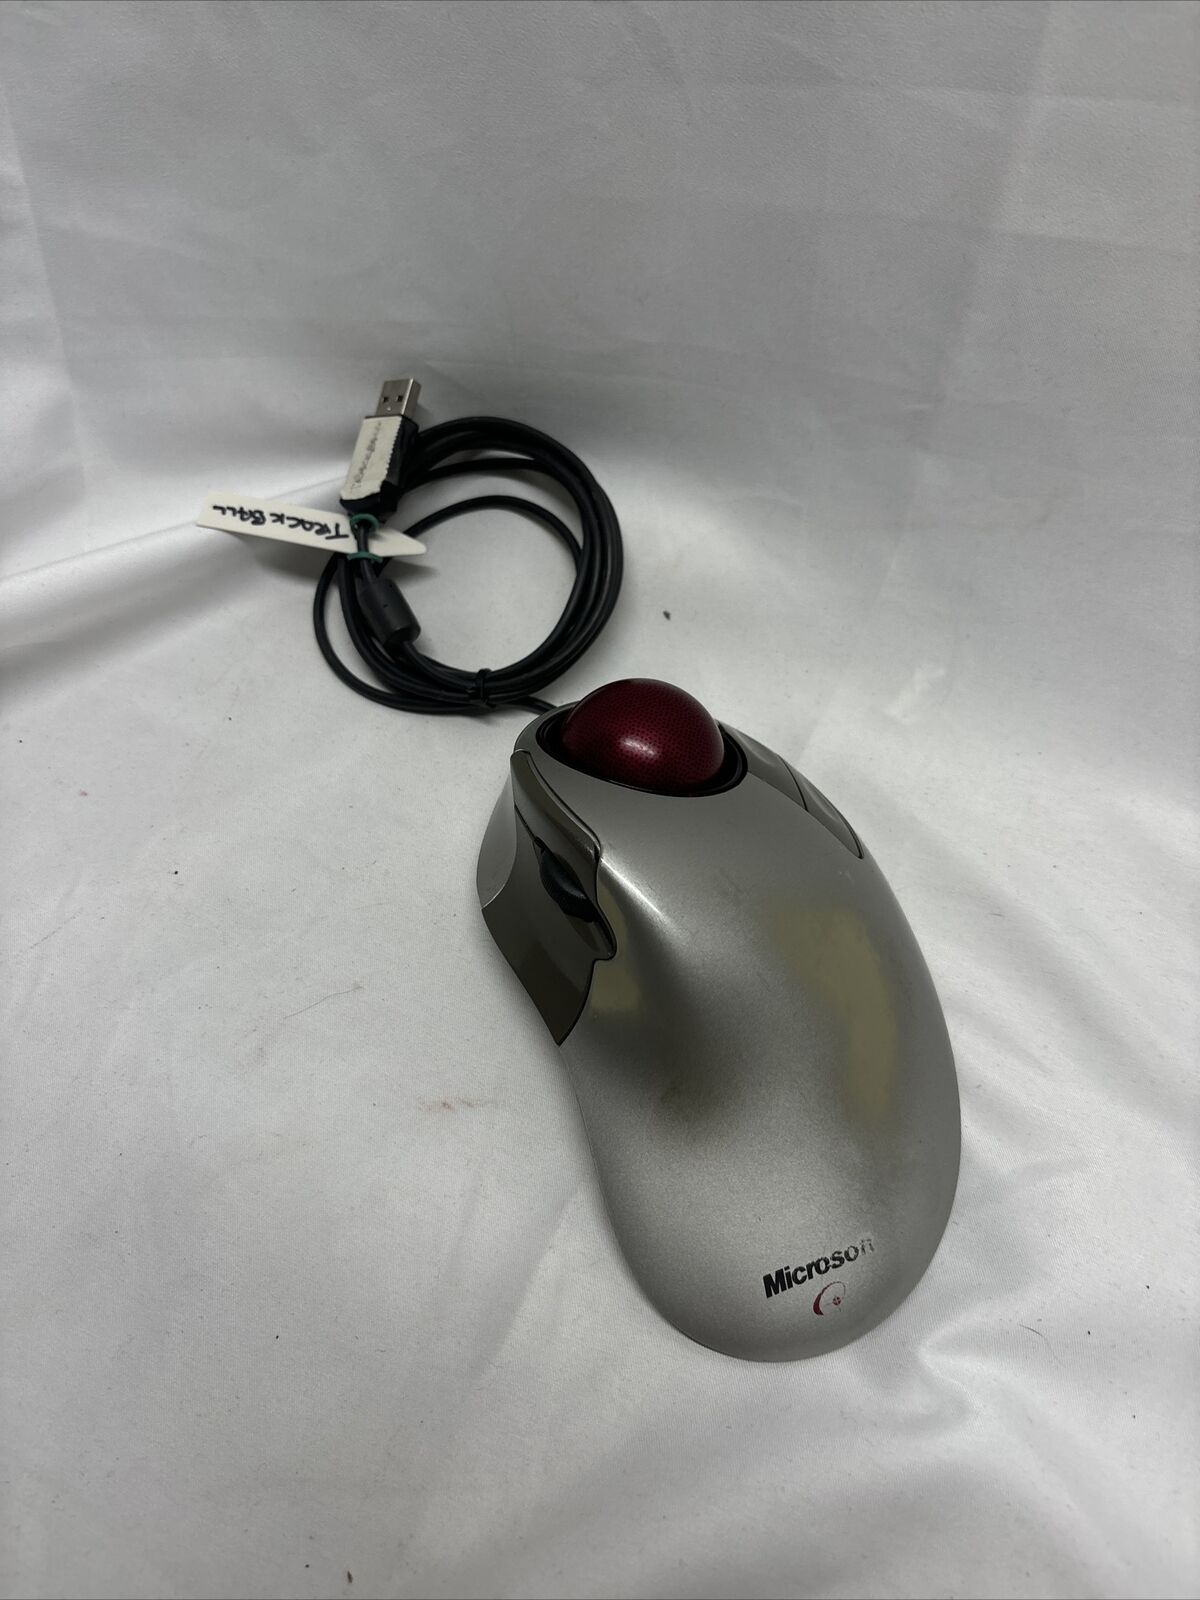 Microsoft Trackball Explorer 1.0  X05-87473 PS2/USB Mouse - Tested